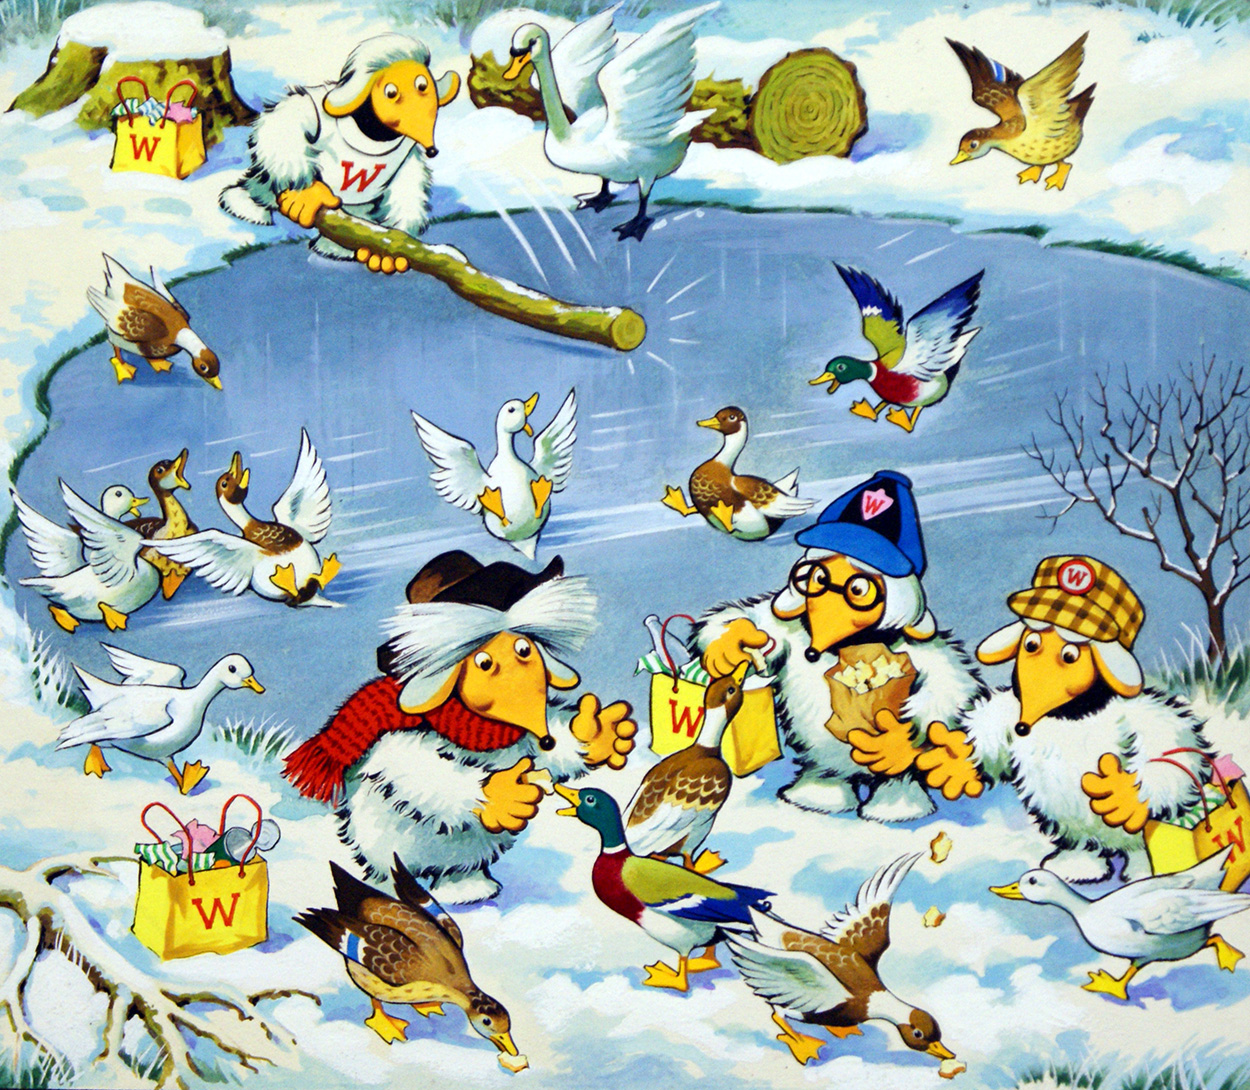 The Wombles: Feeding Ducks (Original) art by The Wombles (Blasco) Art at The Illustration Art Gallery